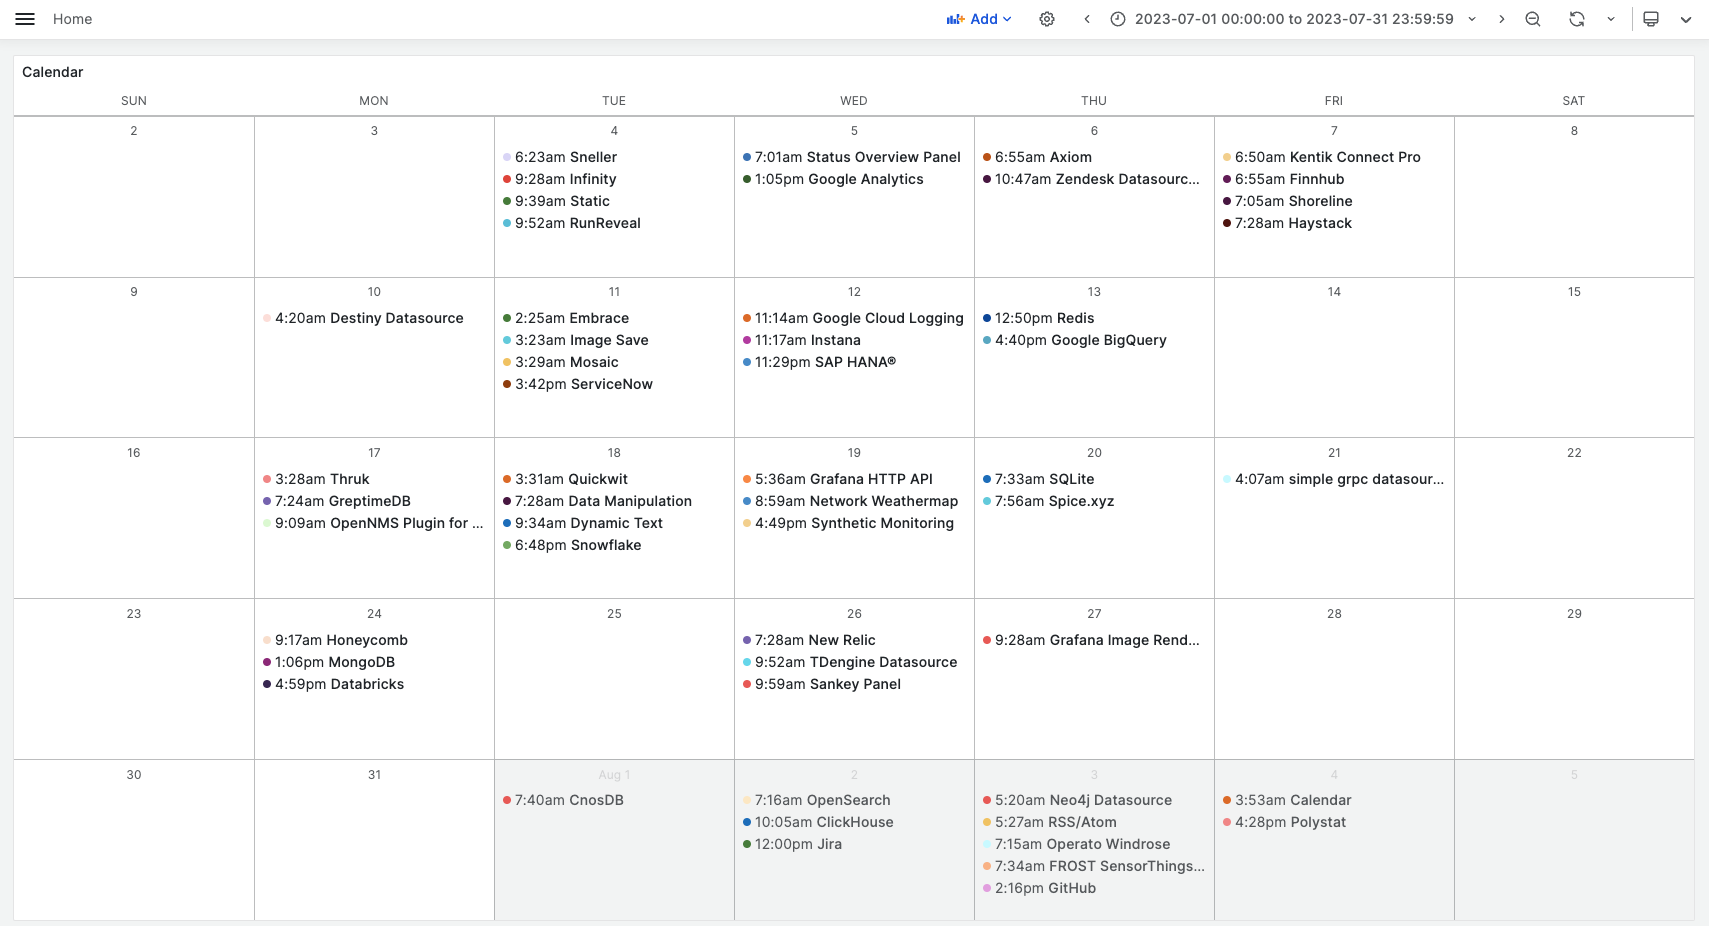 Calendar Panel displays Grafana plugins updated in July 2023.